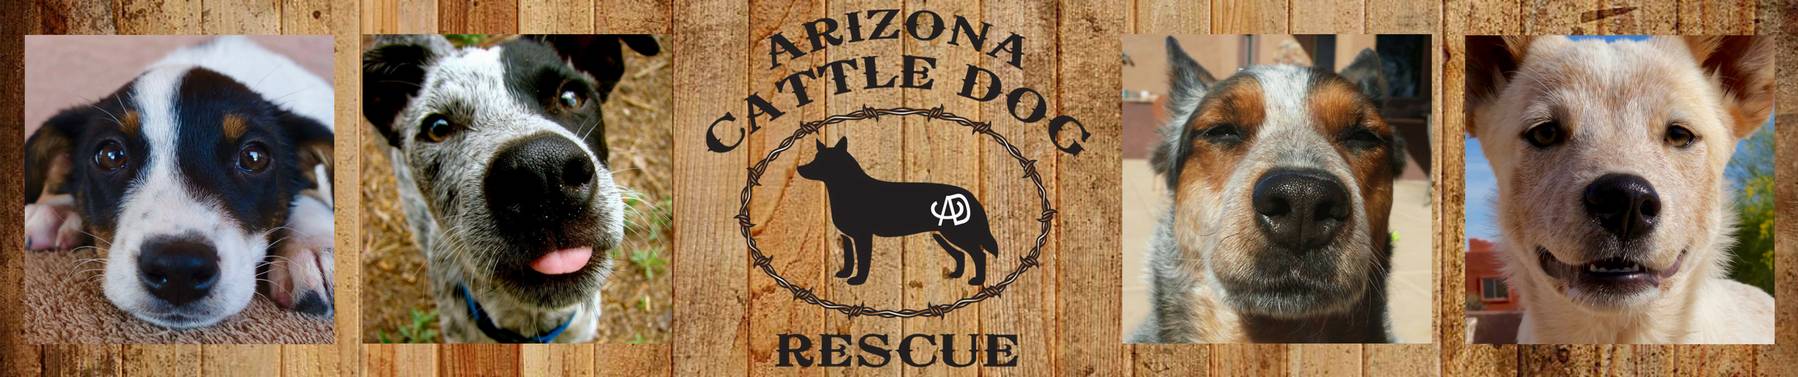 arizona cattle dog rescue banner